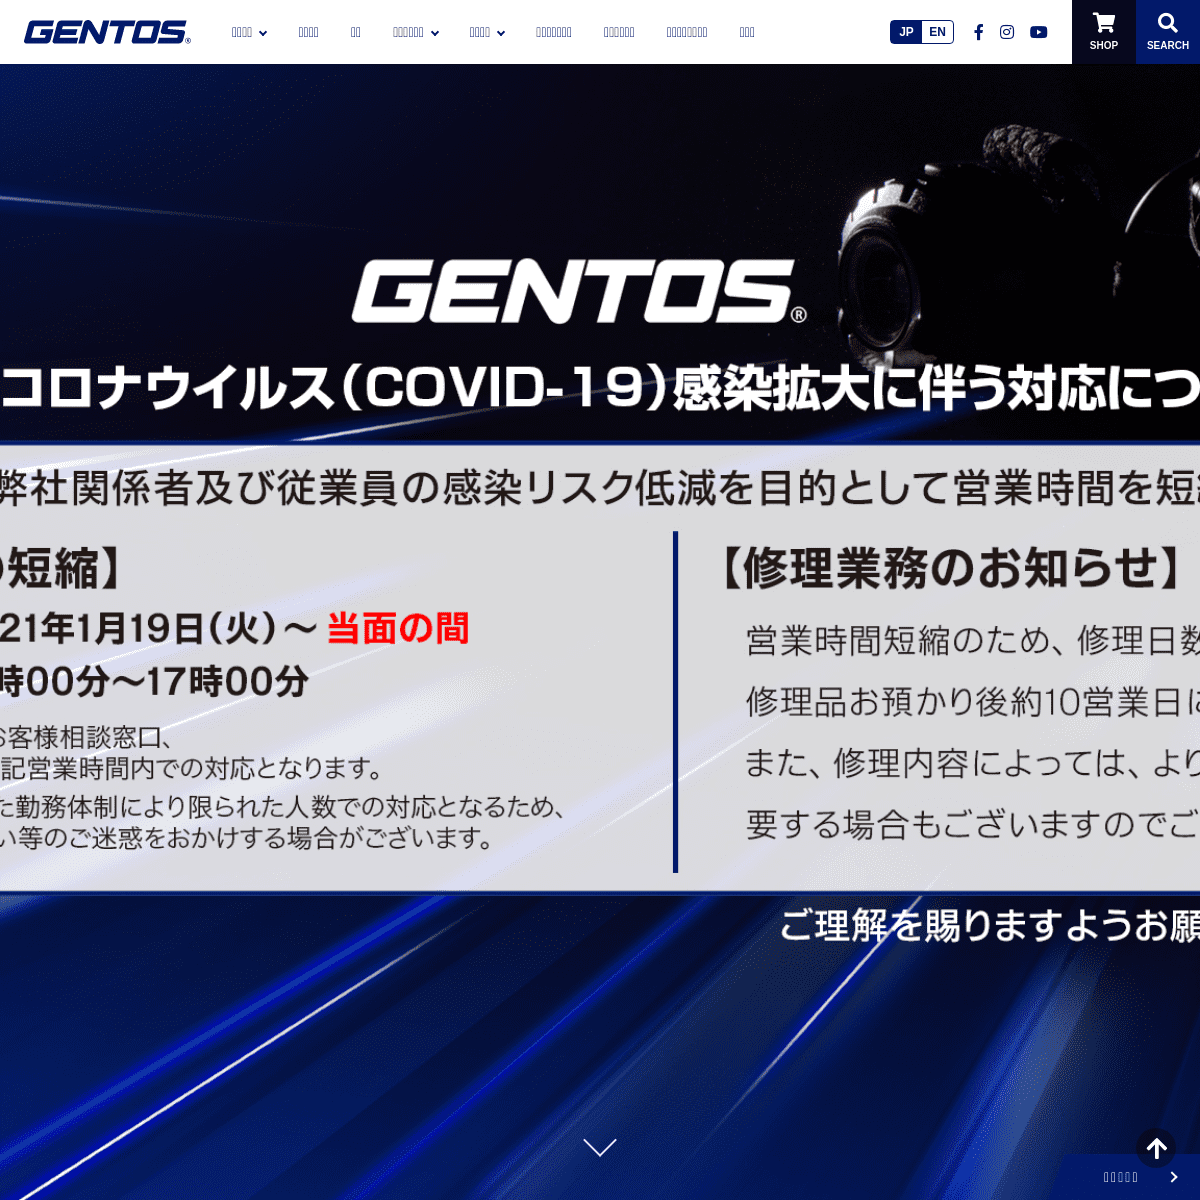 A complete backup of https://gentos.jp